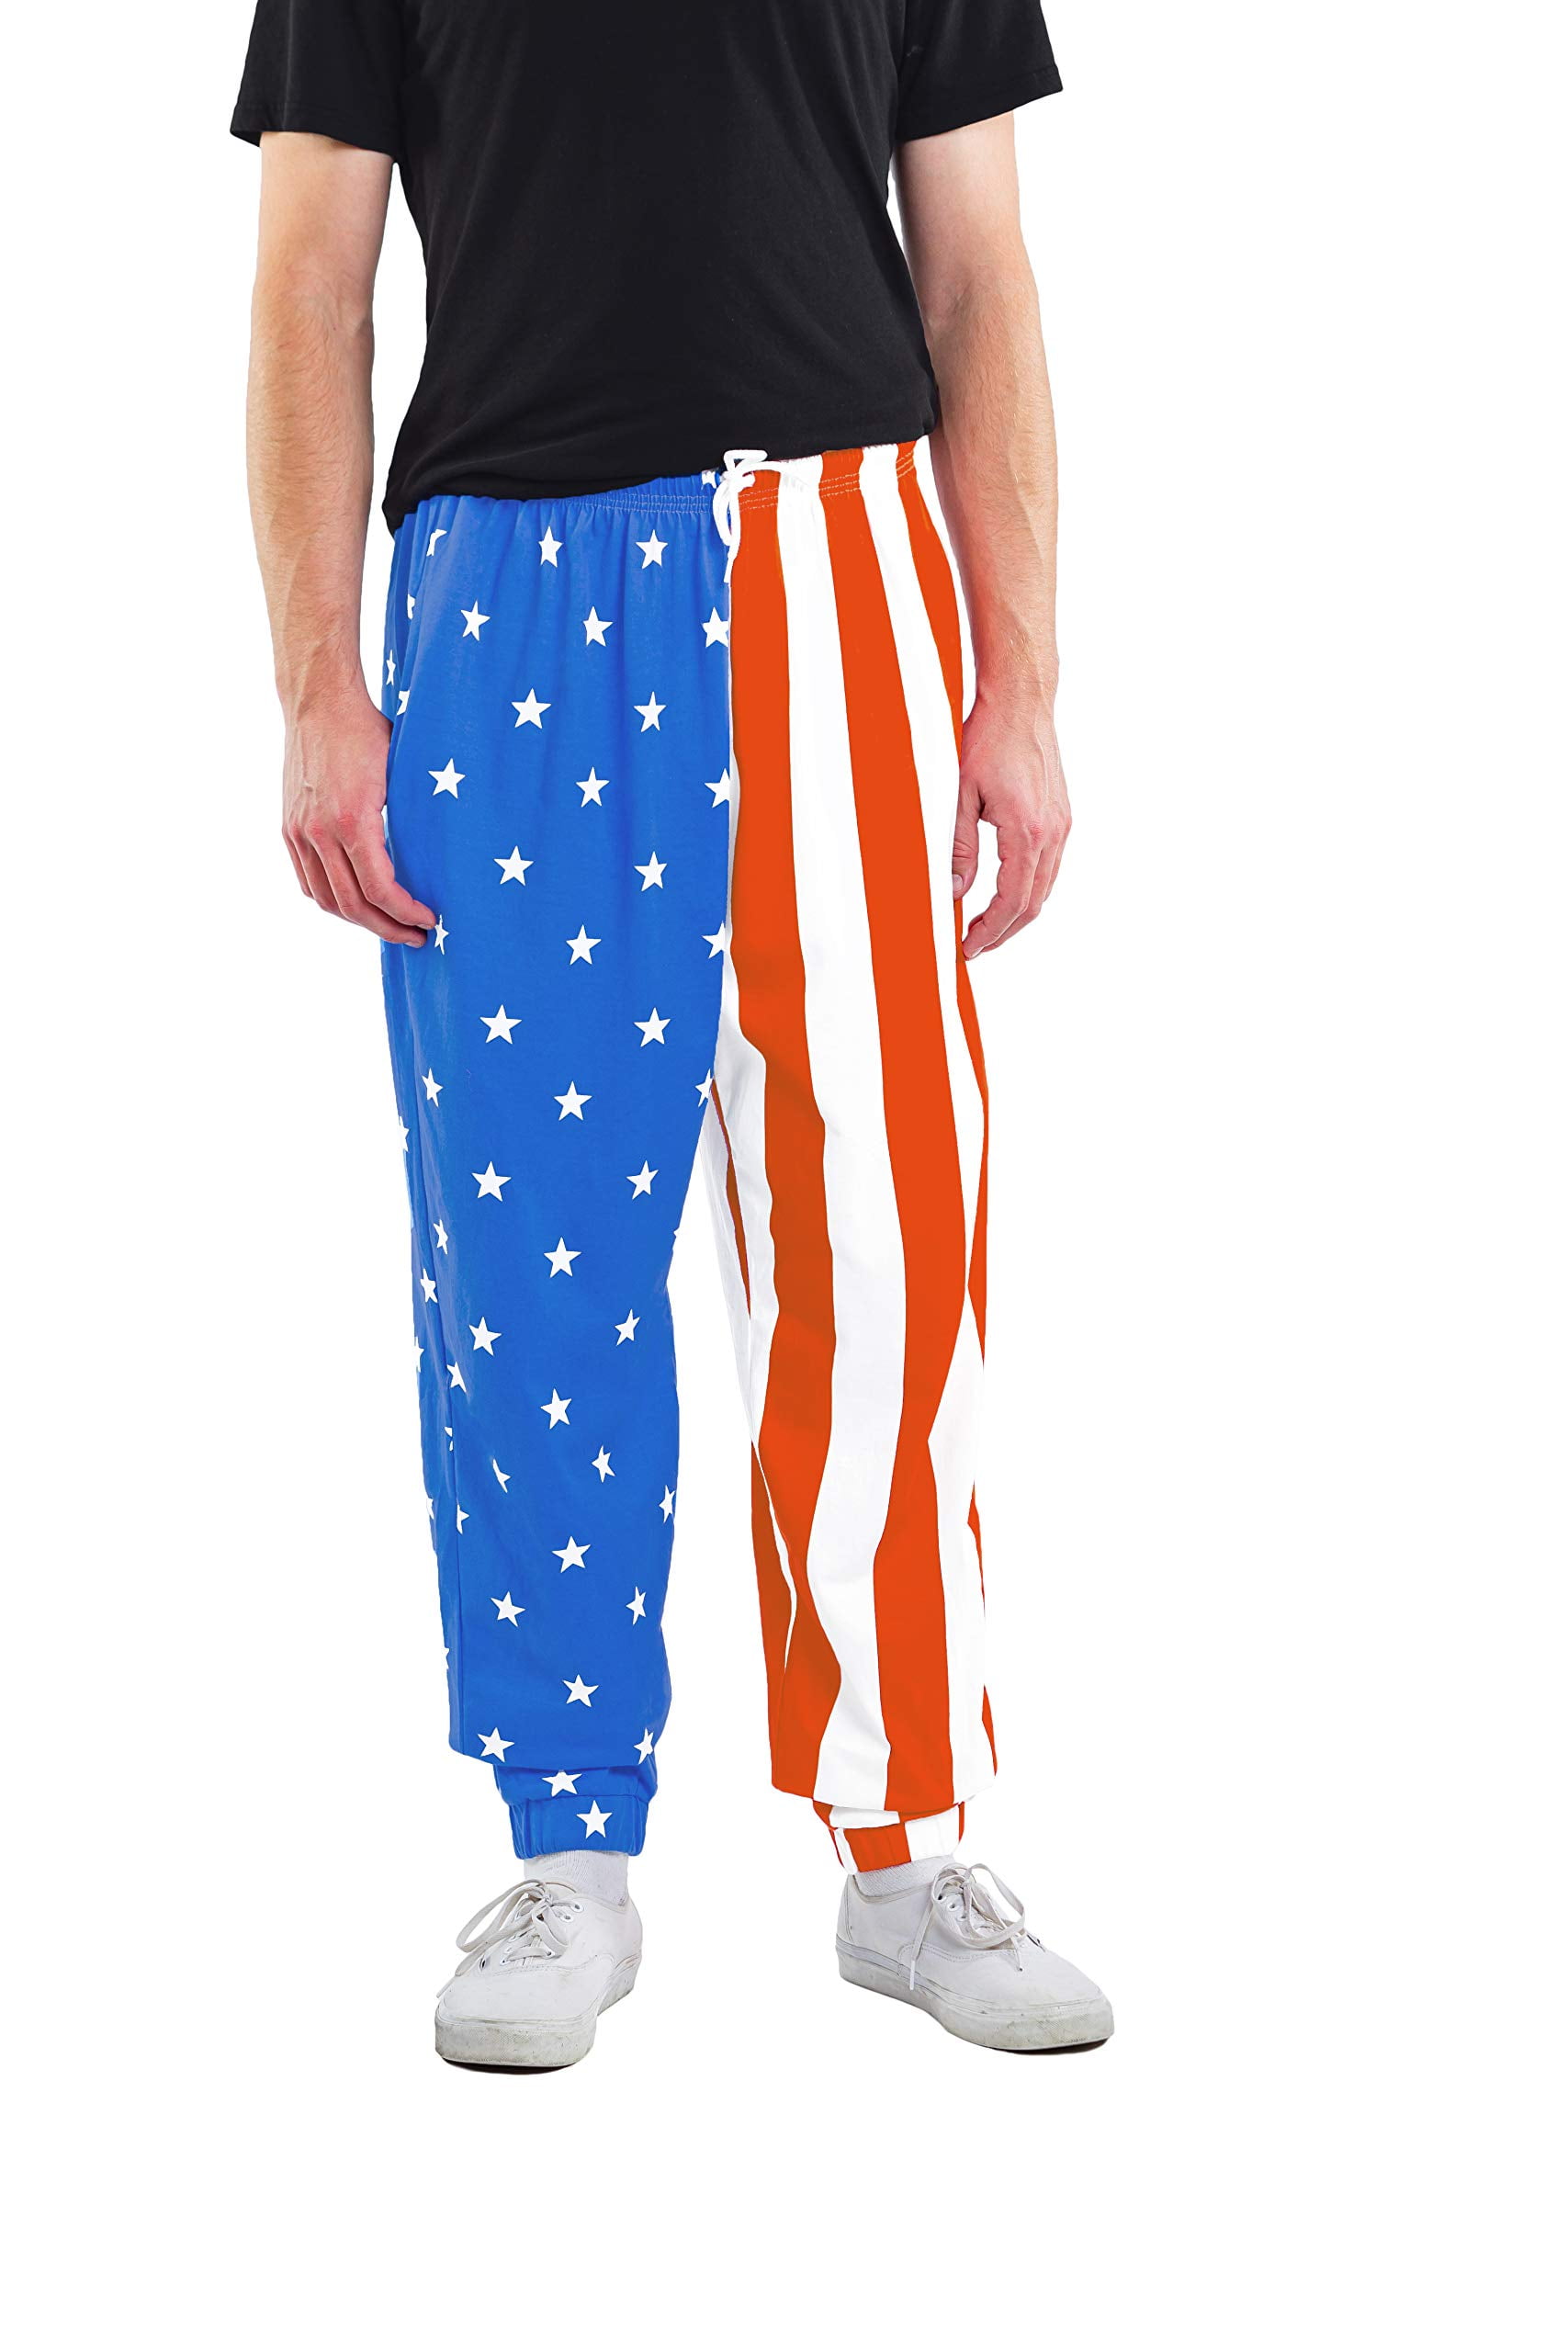 Tipsy Elves American Flag Workout Pants Usa Karate Pants Loose Fitting Xl